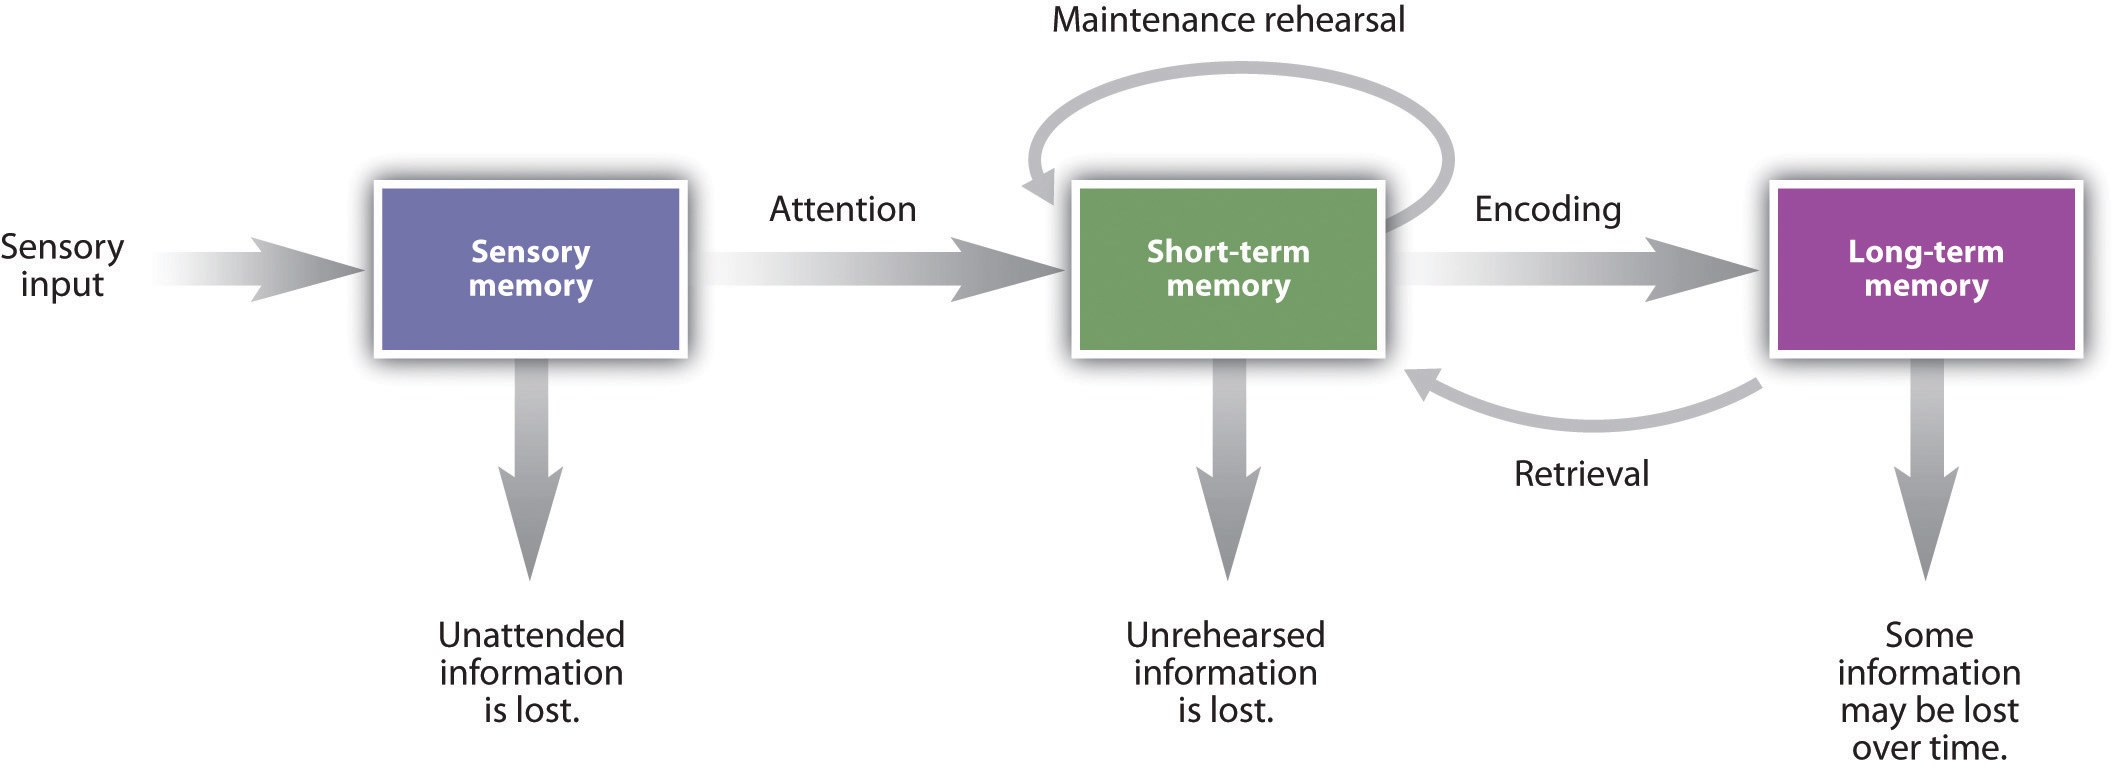 Diagrama de Modelo de tres etapas de memoria. Las tres etapas son la memoria sensorial, a corto plazo y a largo plazo.